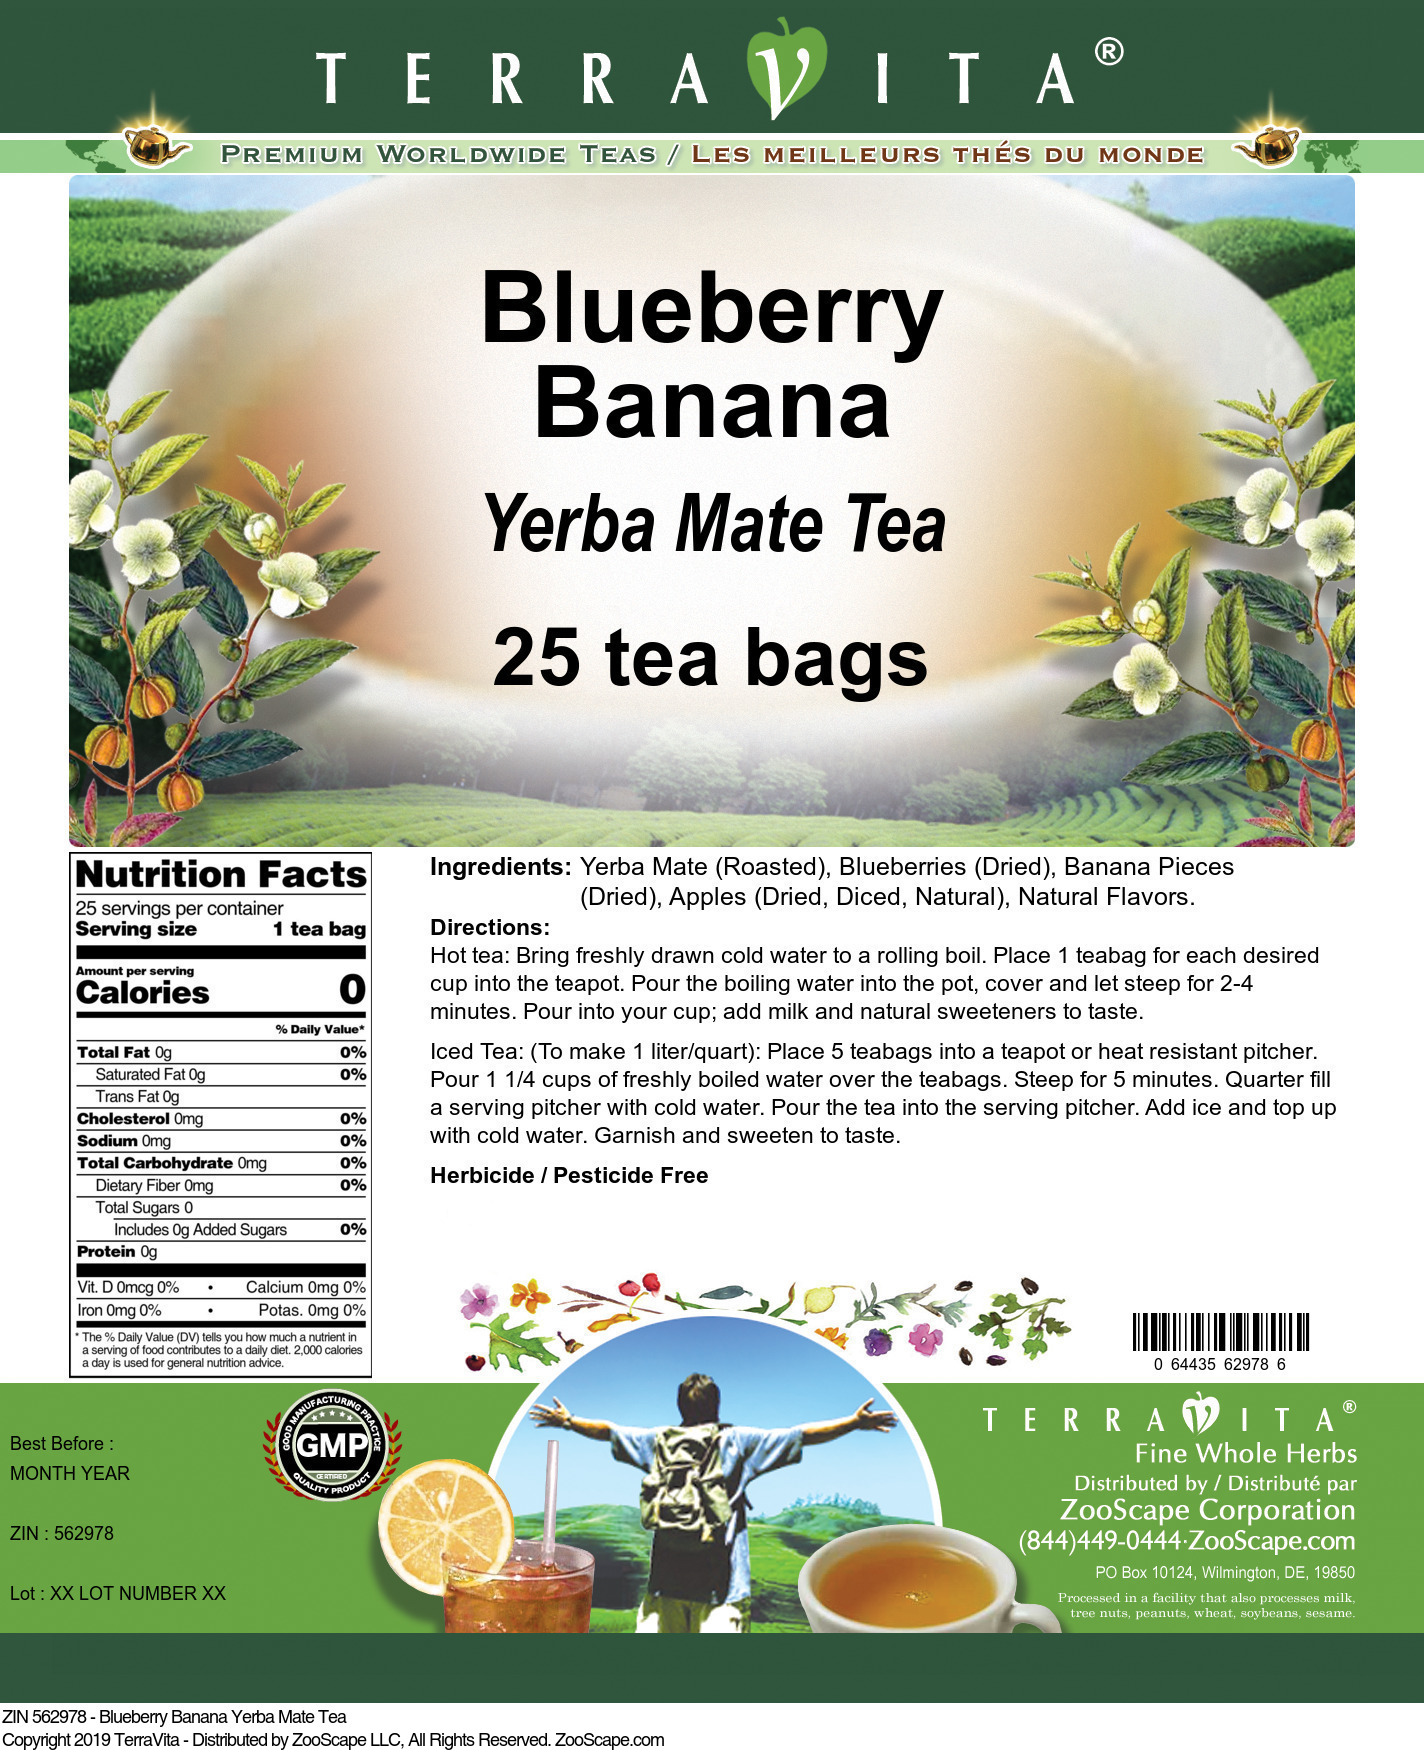 Blueberry Banana Yerba Mate Tea - Label